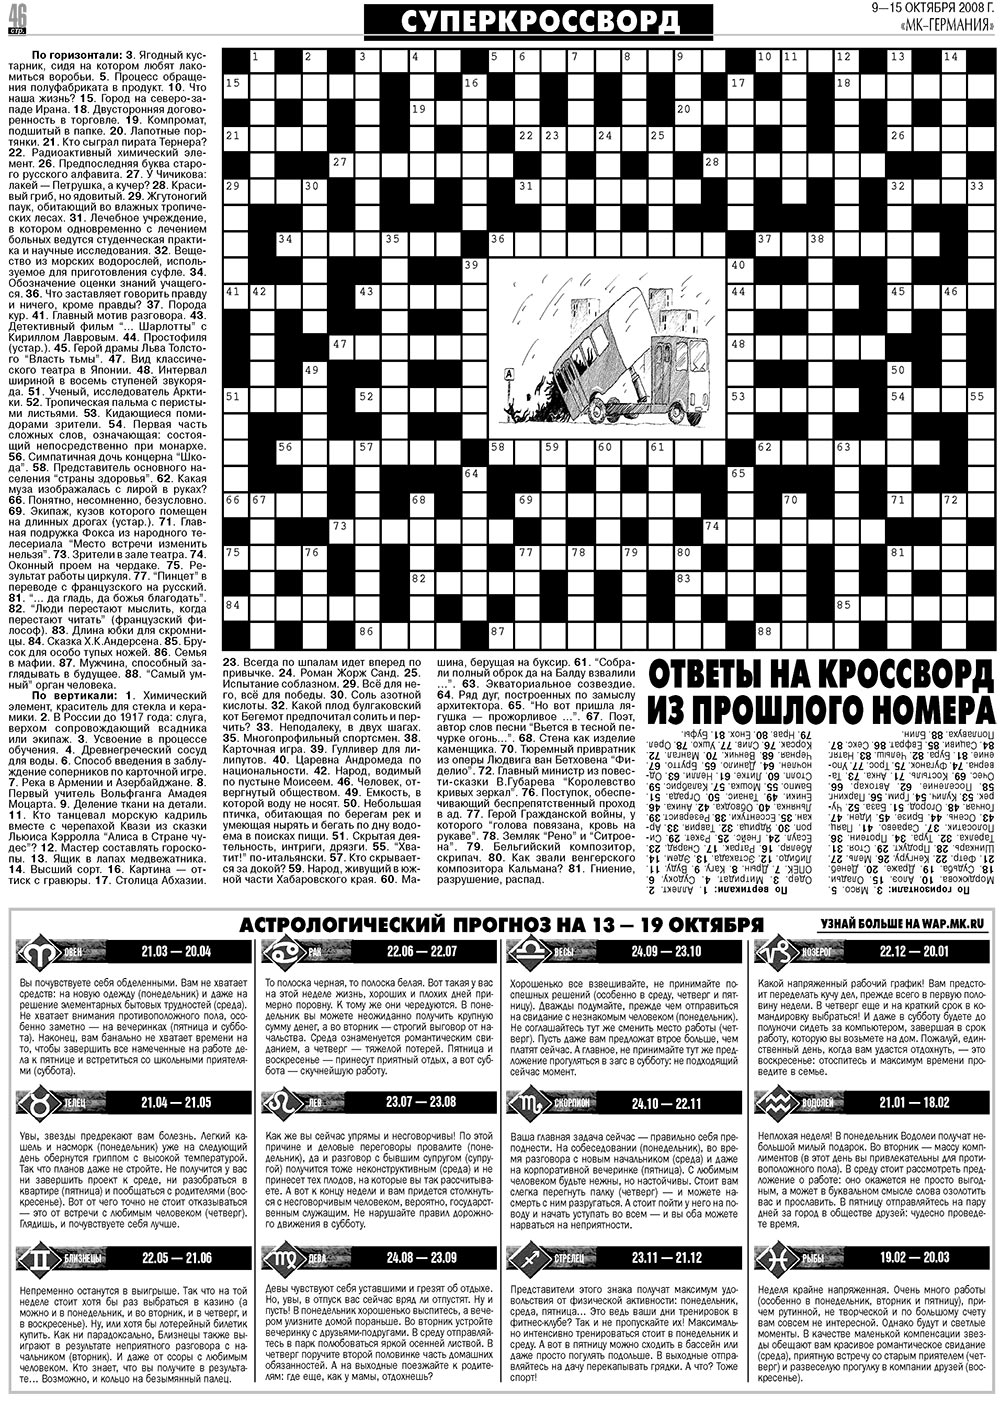 МК-Германия, газета. 2008 №41 стр.46